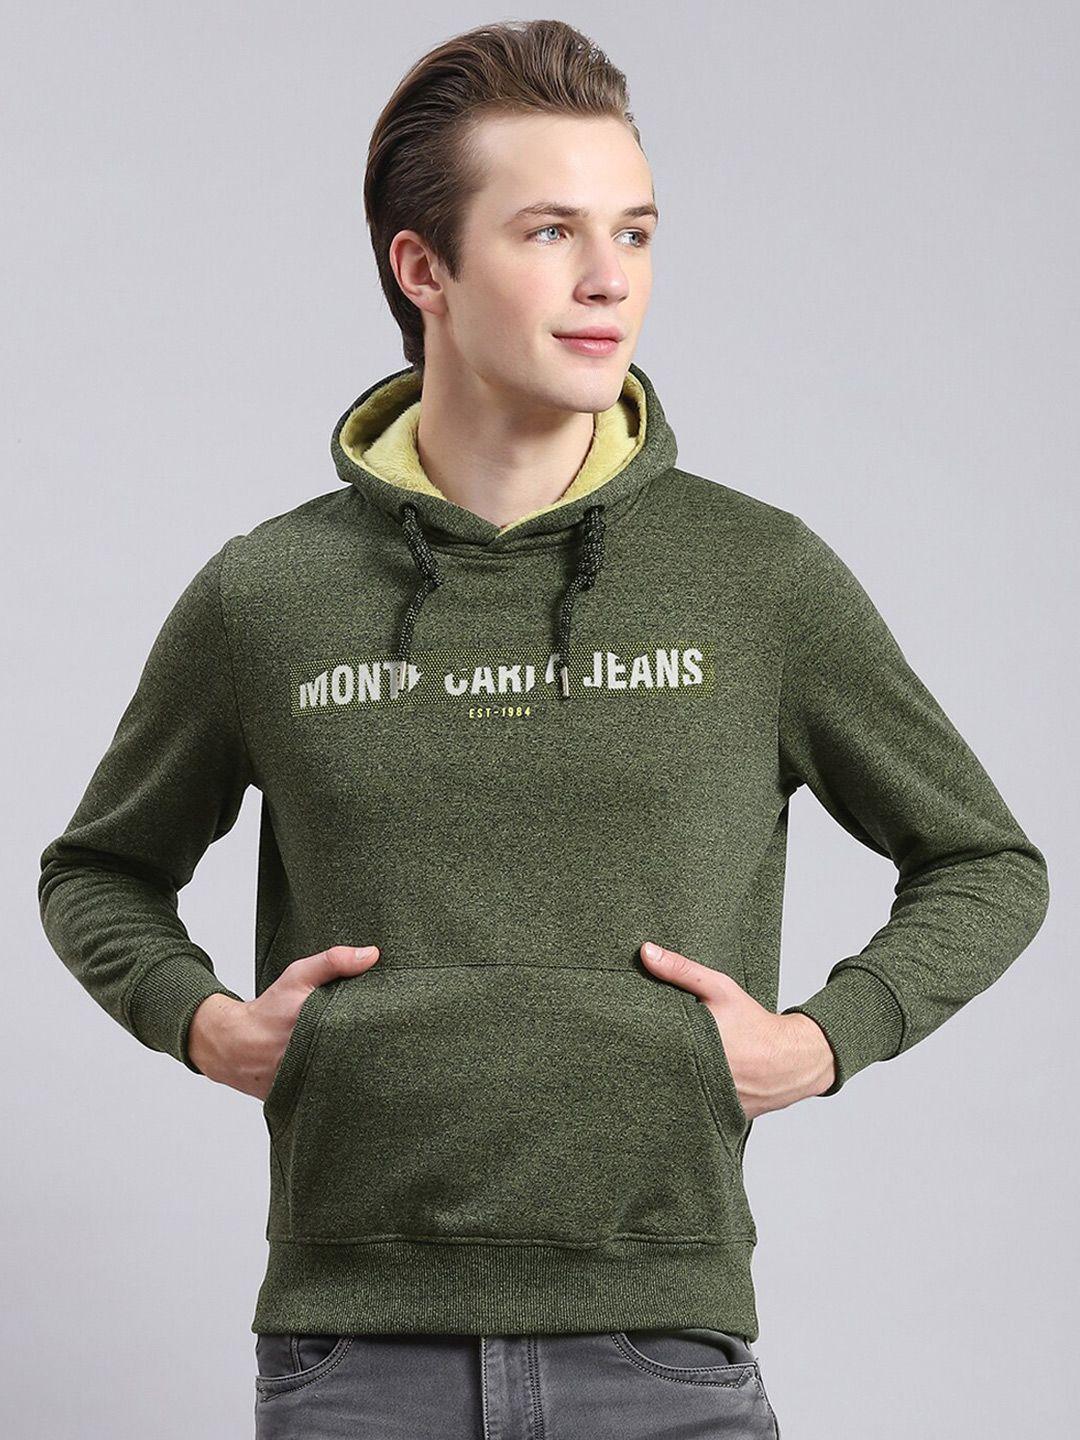 monte carlo typography printed hooded sweatshirt